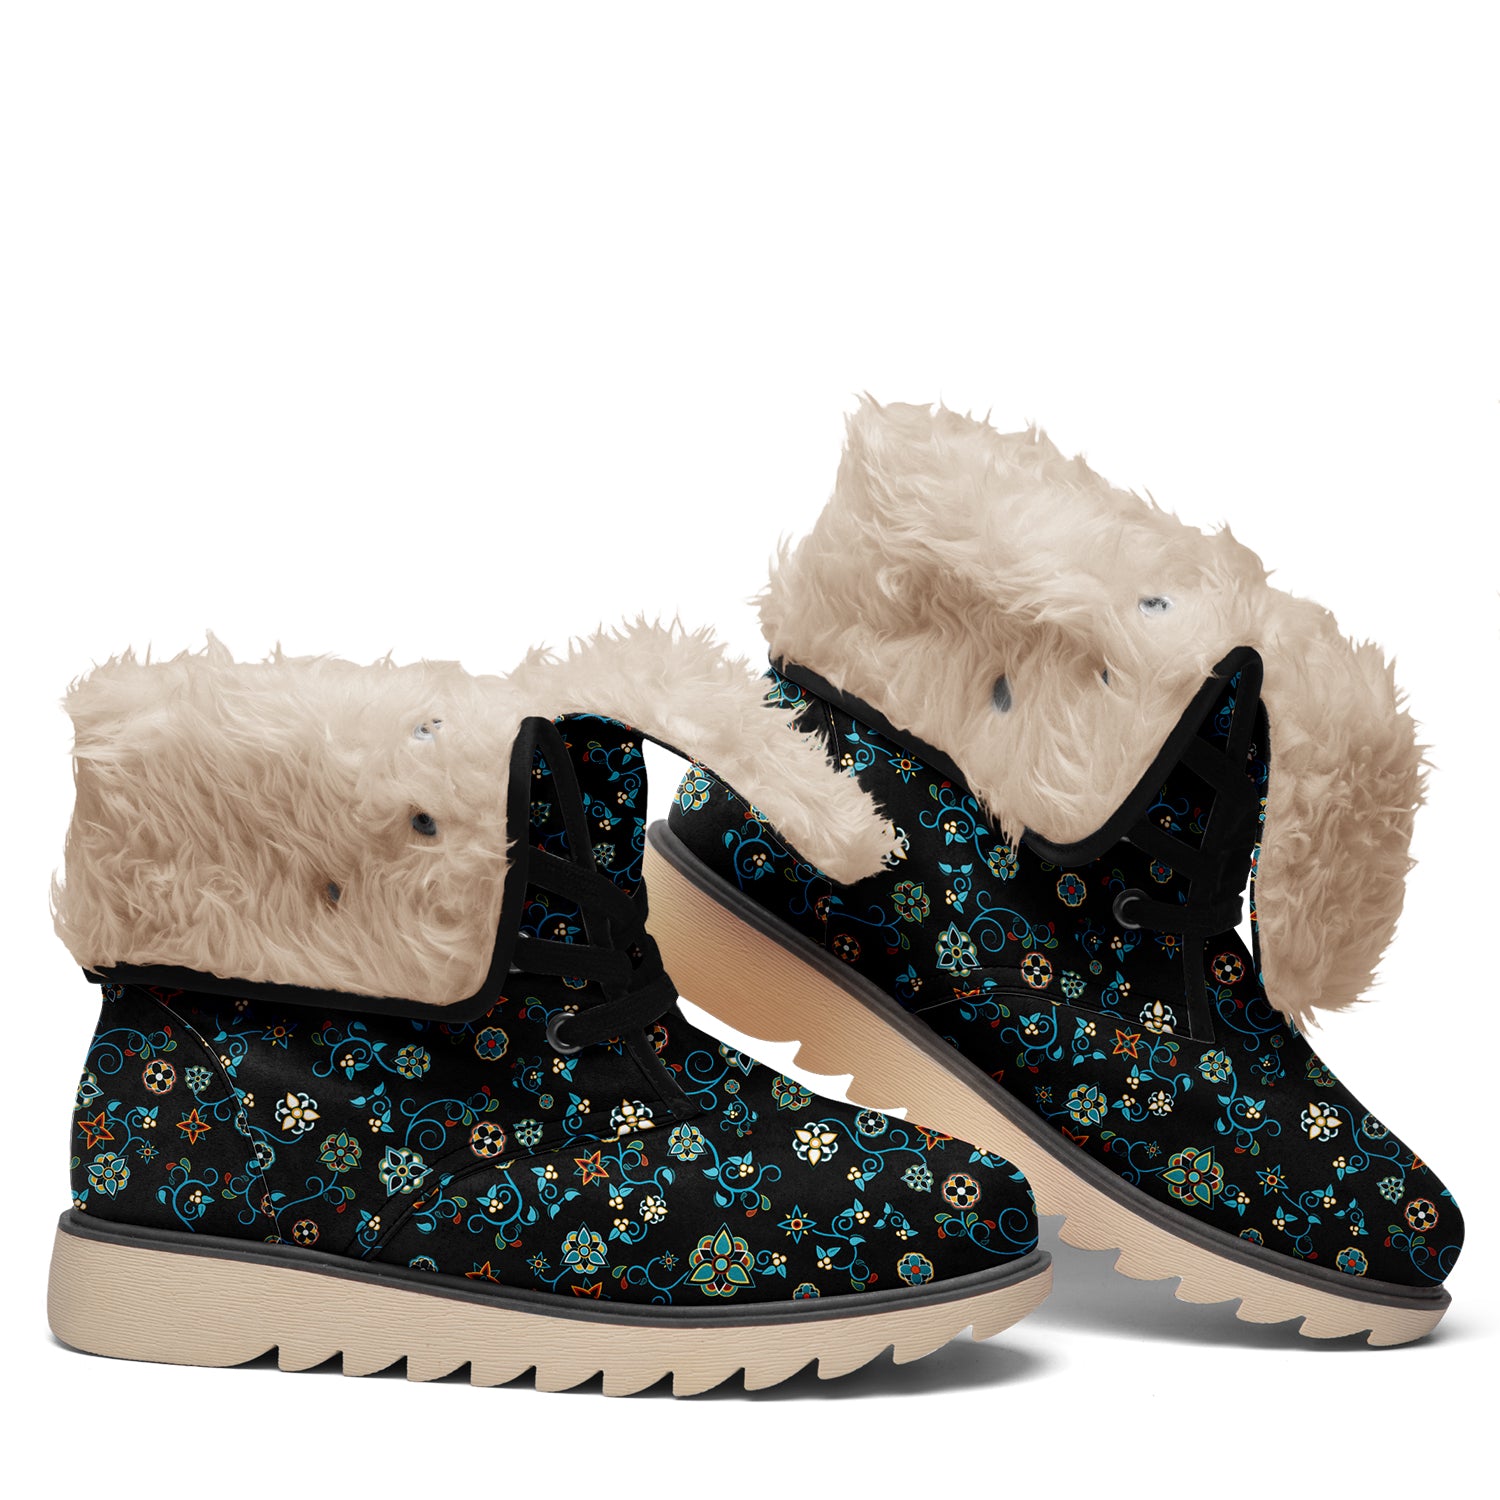 Ocean Bloom Polar Winter Boots